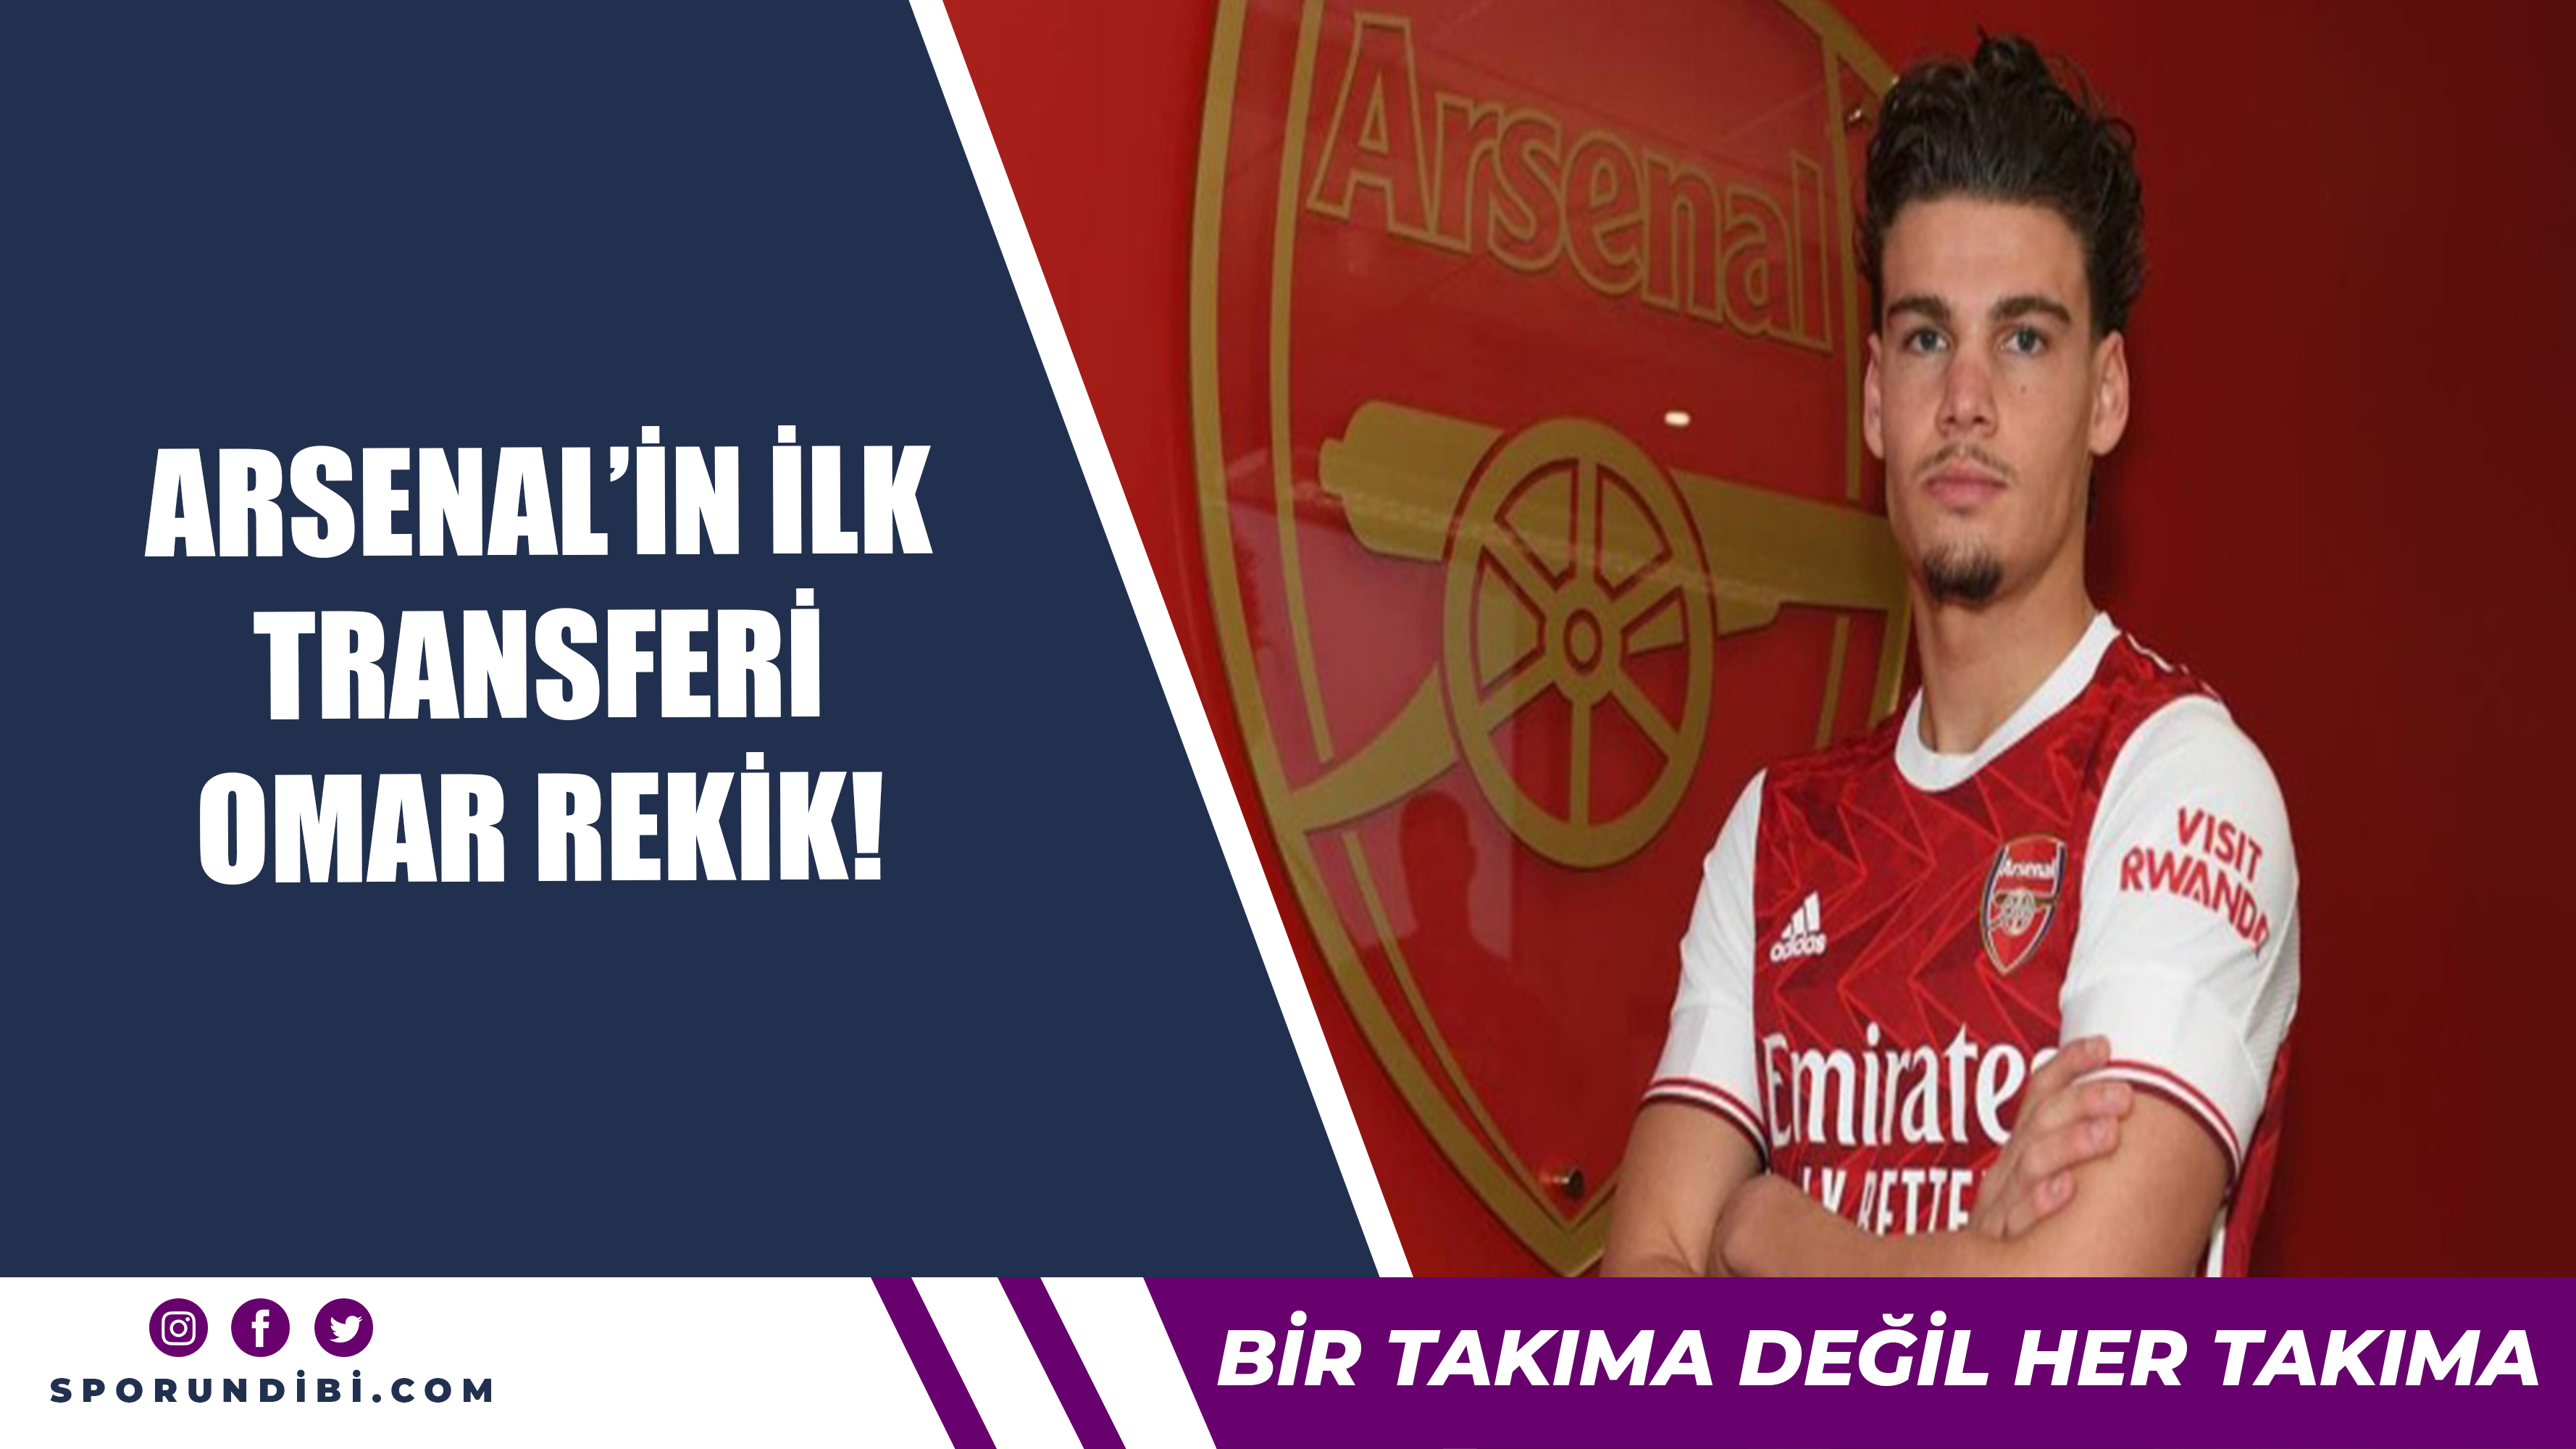 Arsenal'in ilk transferi Omar Rekik!